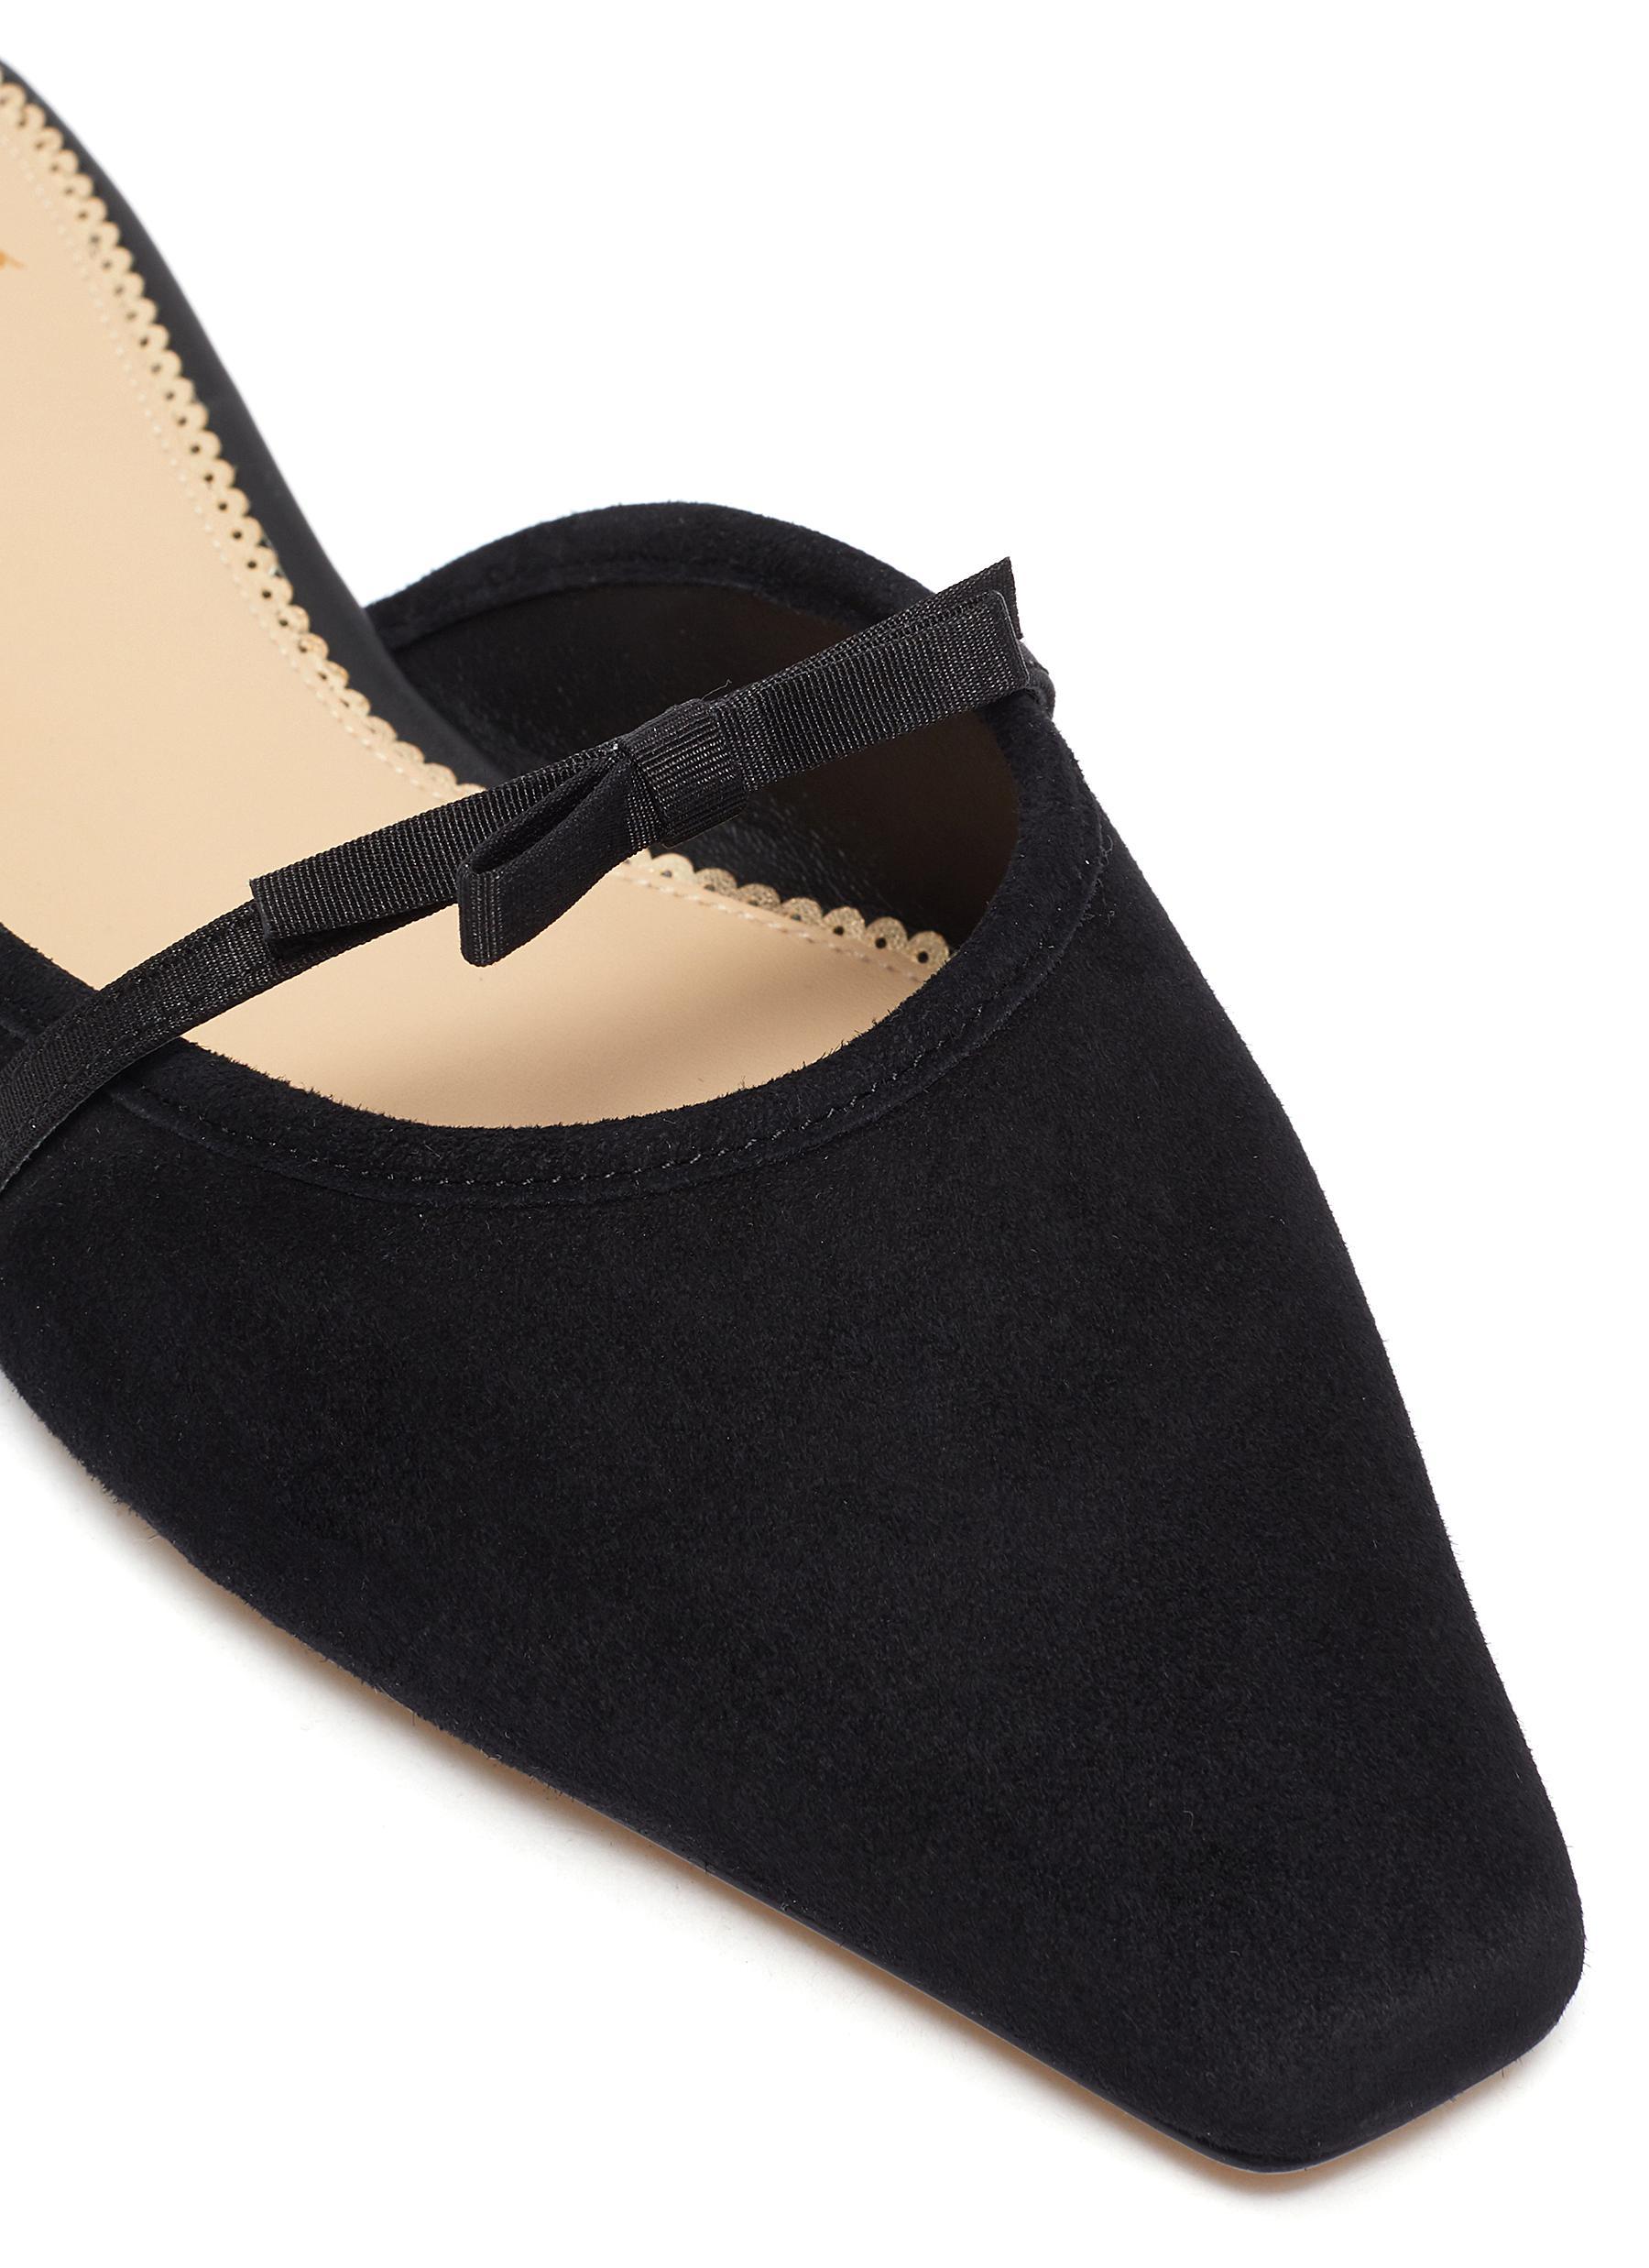 Sam Edelman Black Carol' Bow Strap Suede Flats Women Shoes Flats 